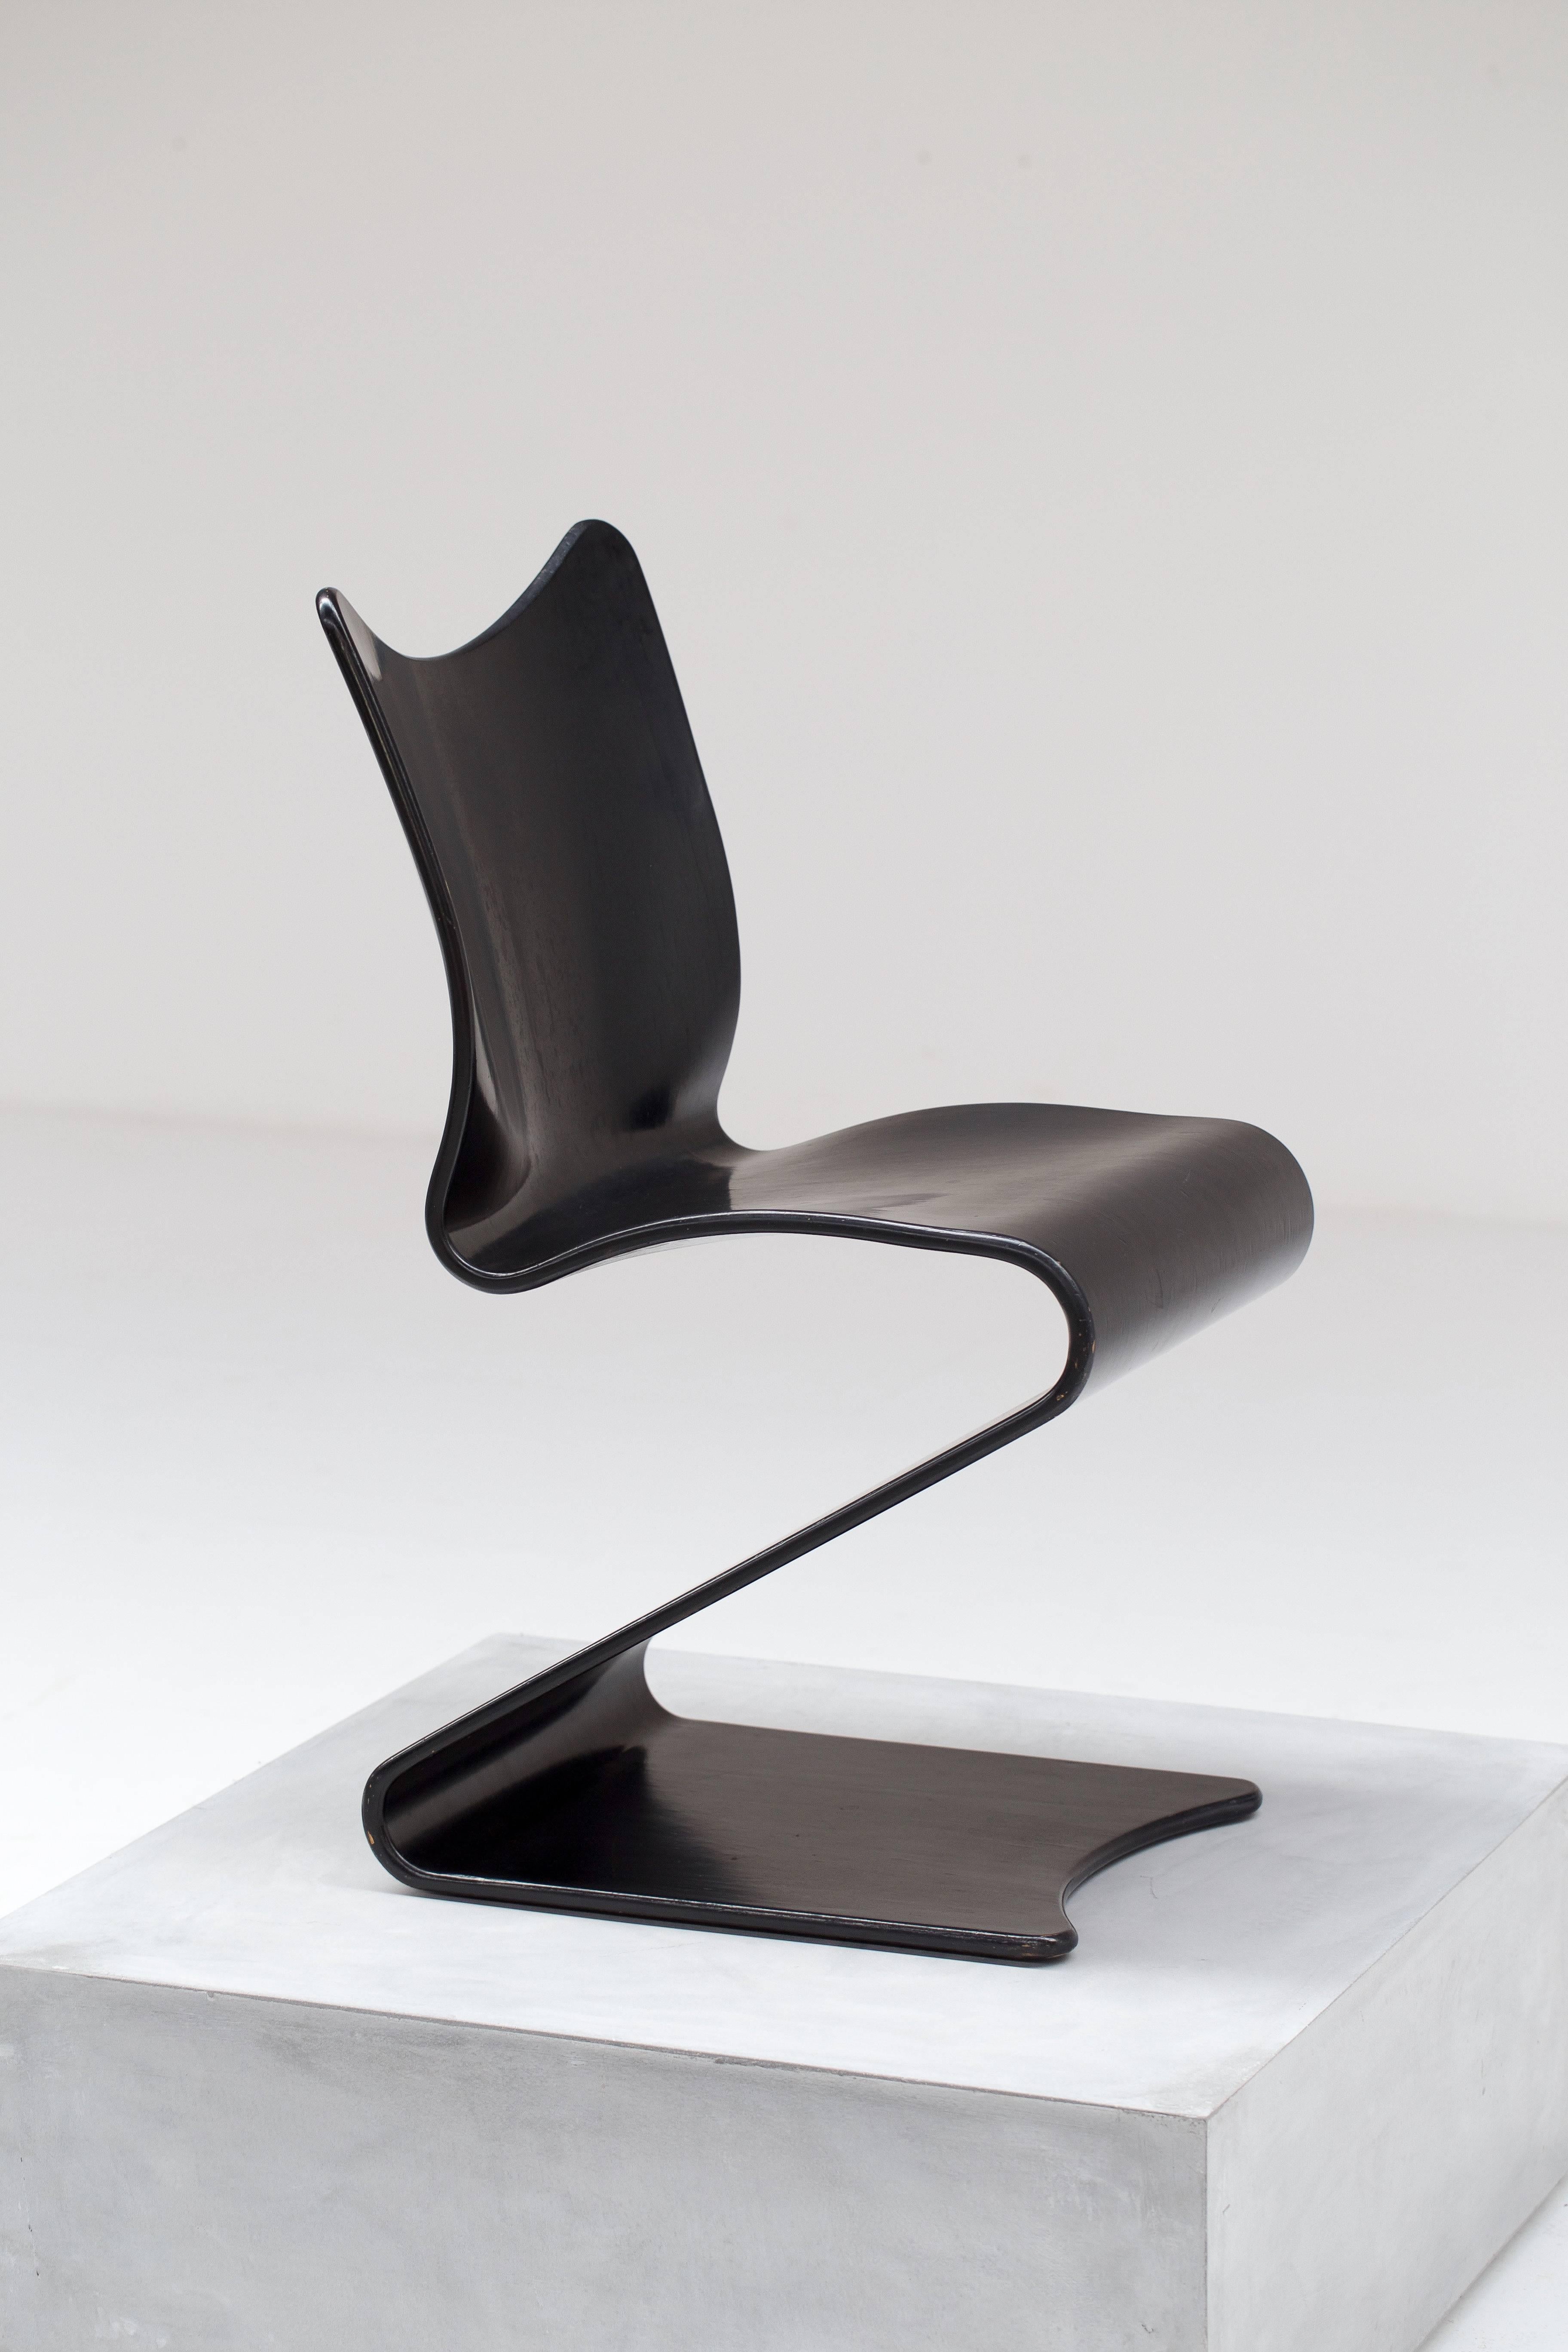 Danish S 275 Chair by Verner Panton